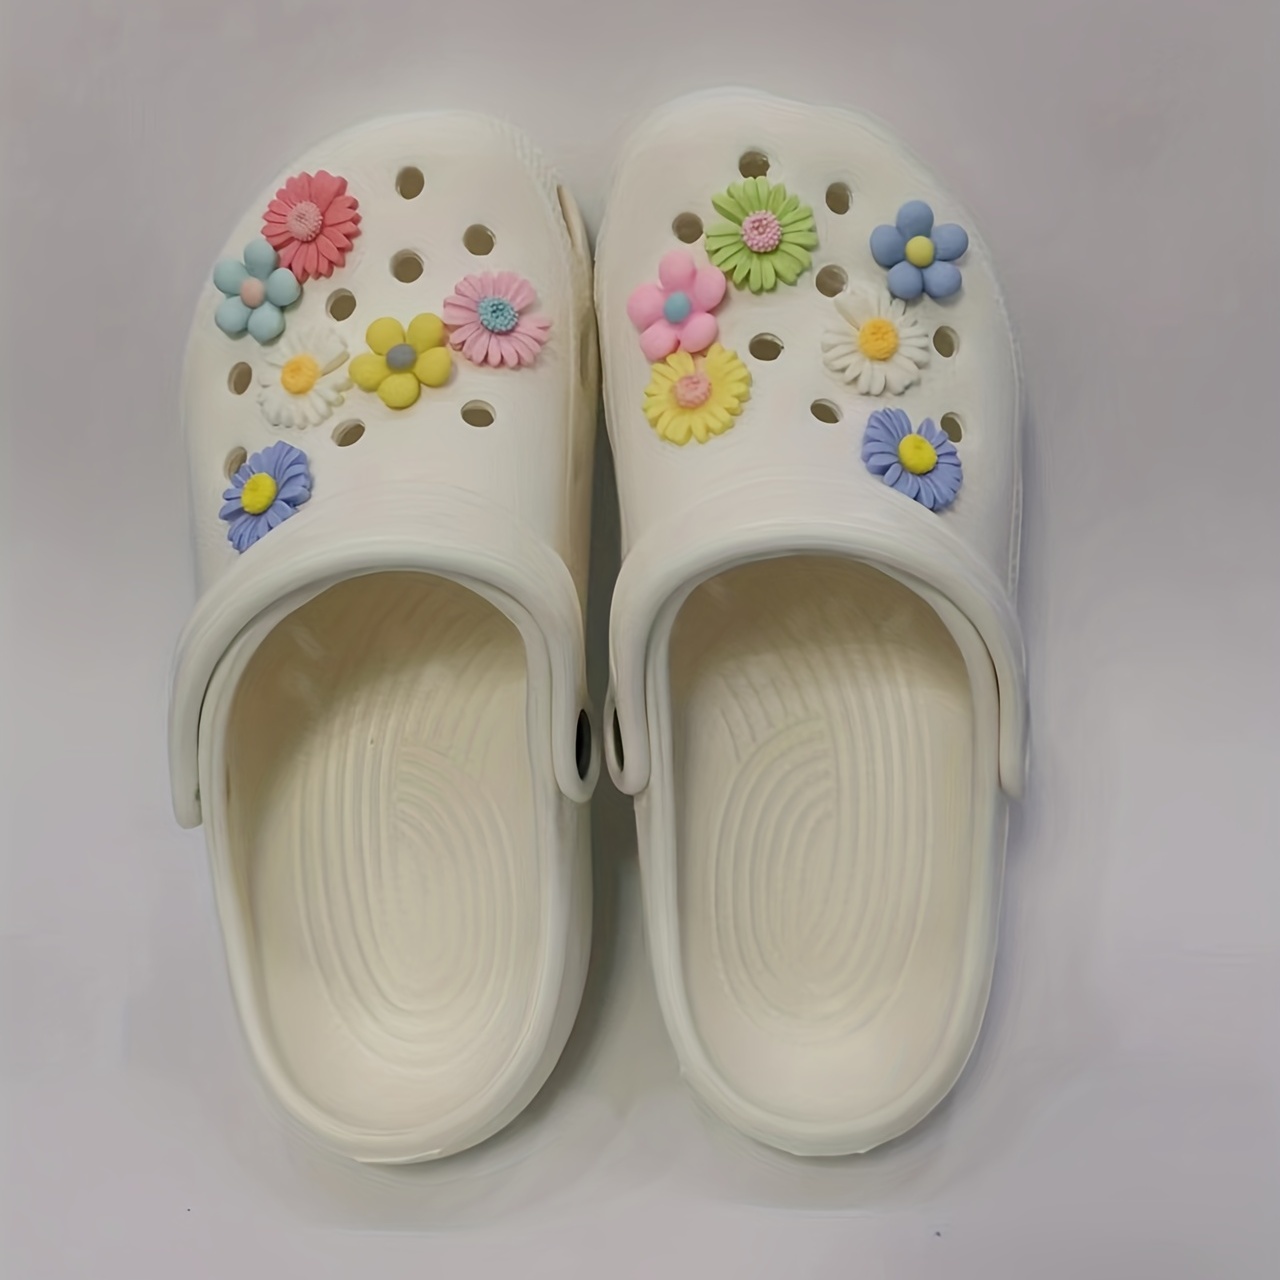 7pcs Cute Flower Shoes Charms For Crocs, Women Aesthetic Flower Shoes  Decoration Charms, Colorful Resin Daisy Flowers Shoe Charms Set For Crocs